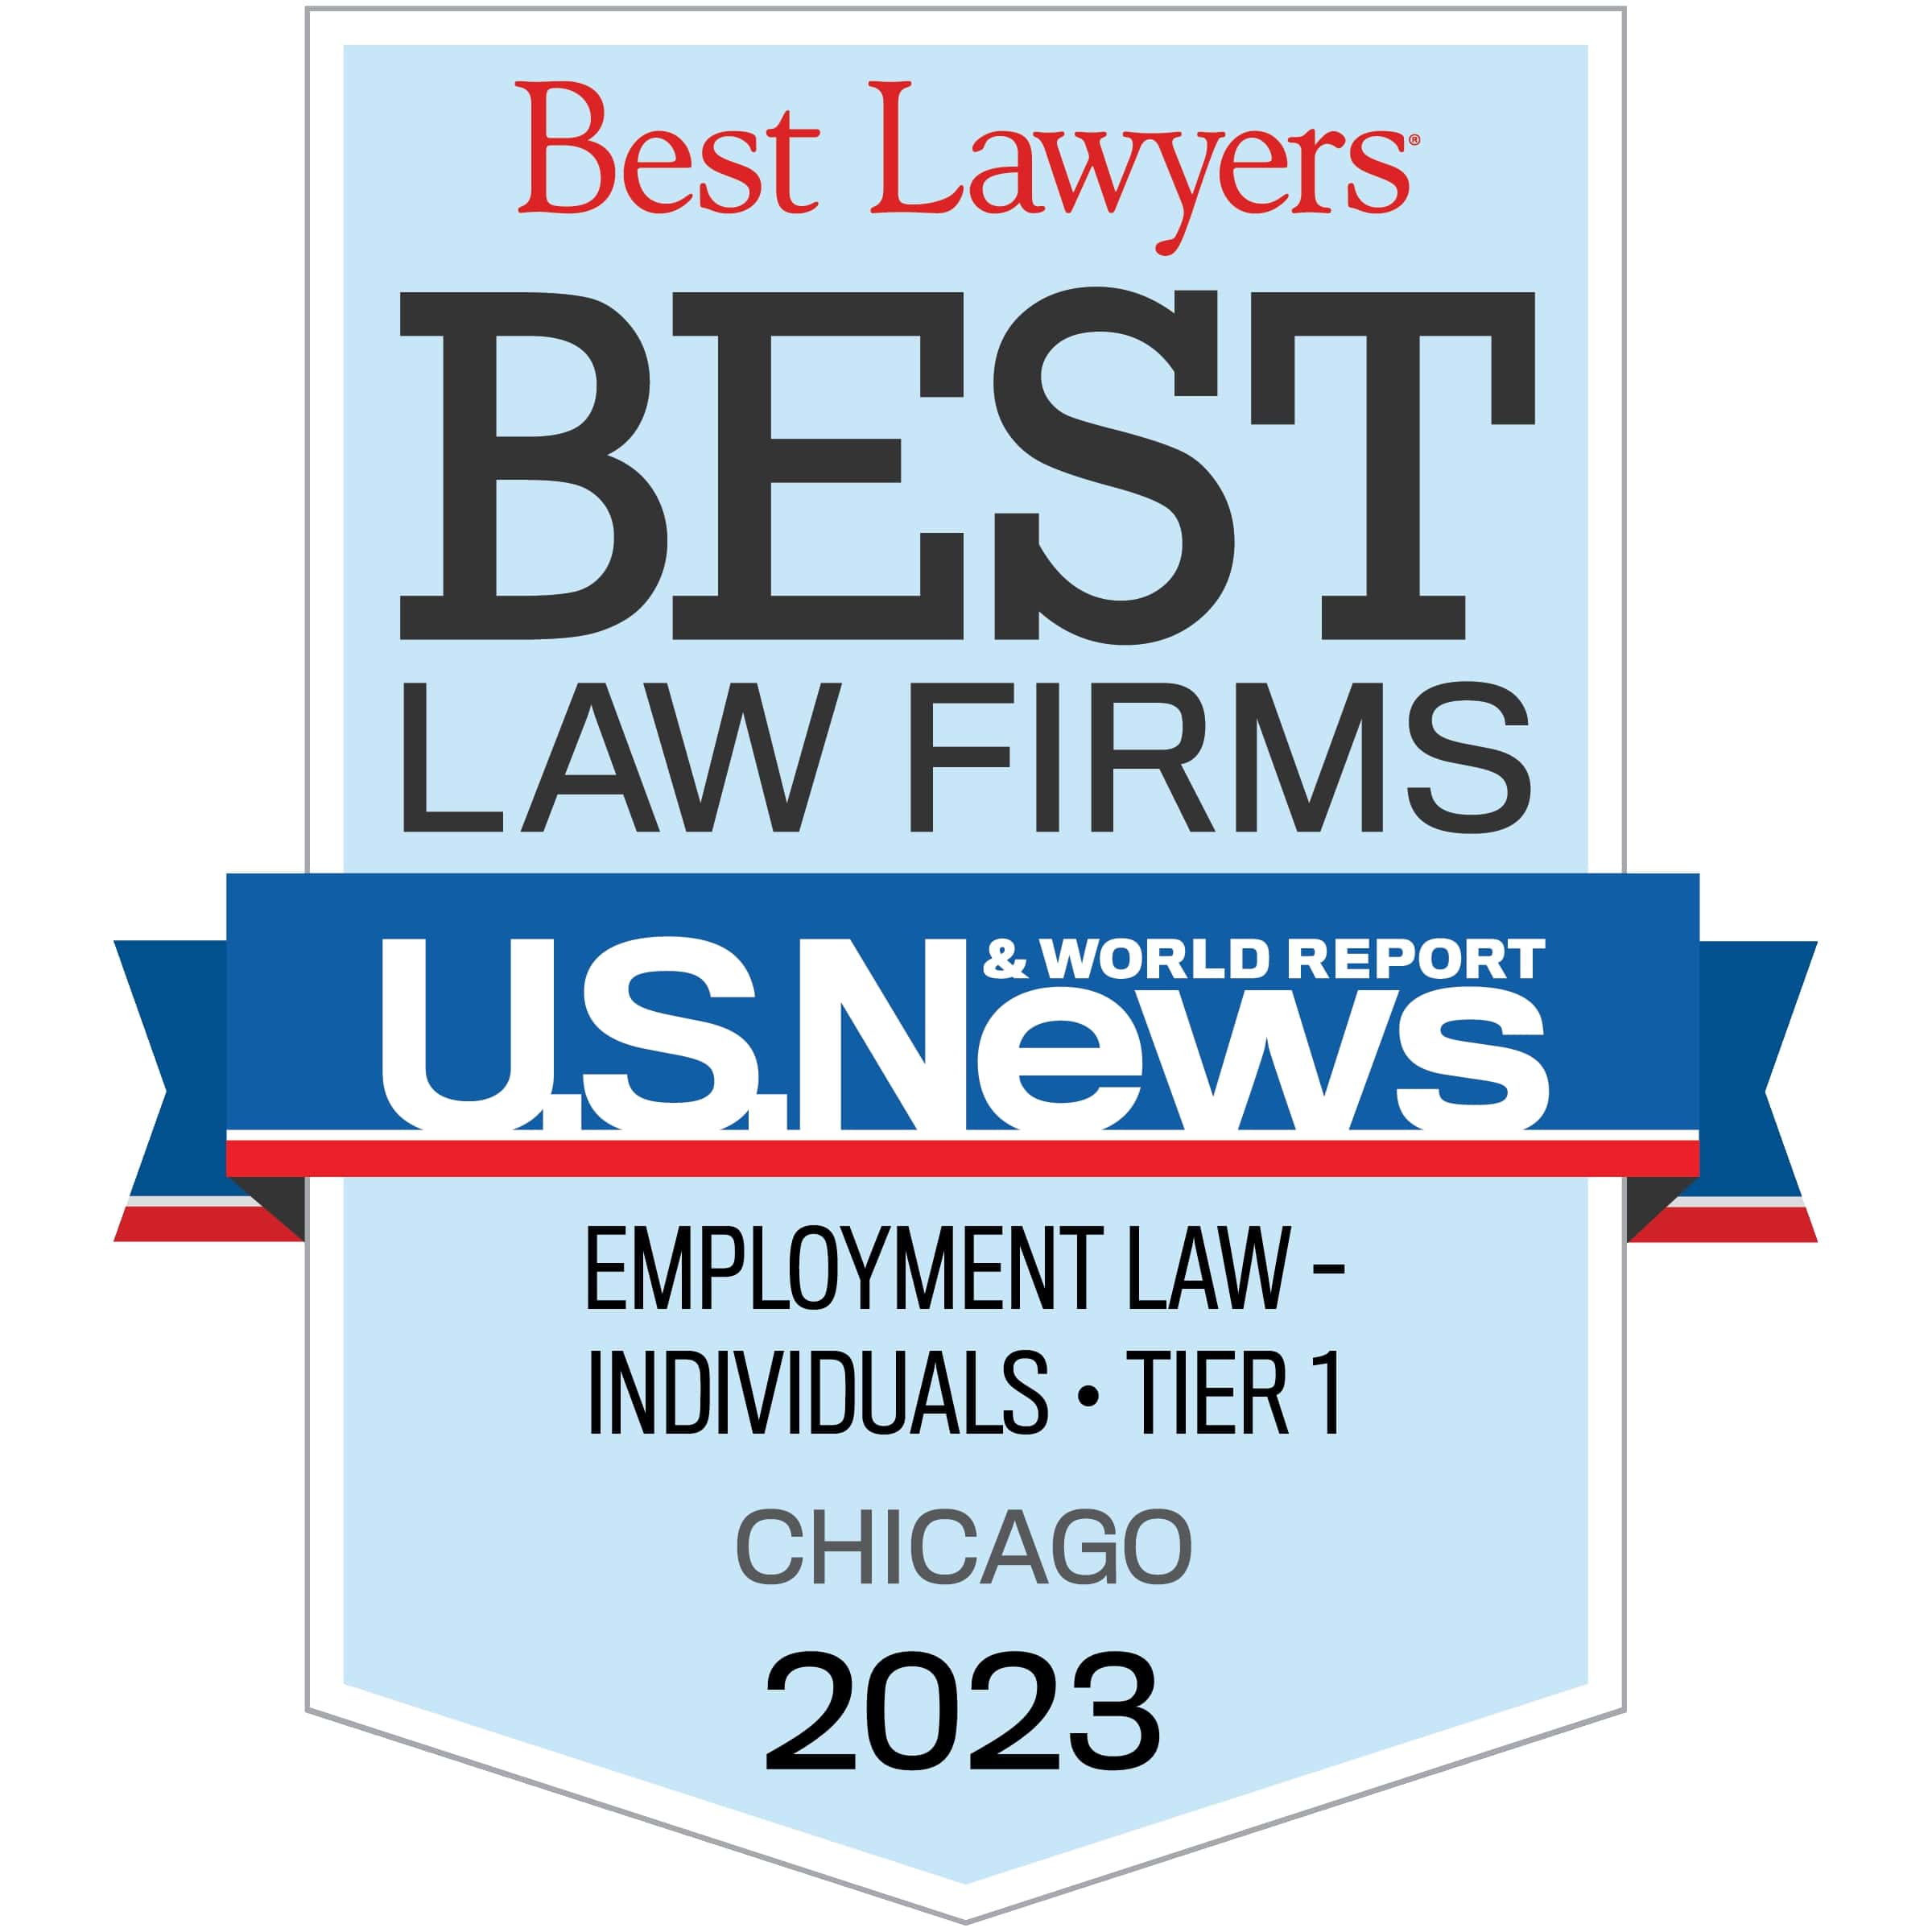 Best Lawyers 2016 badge logo